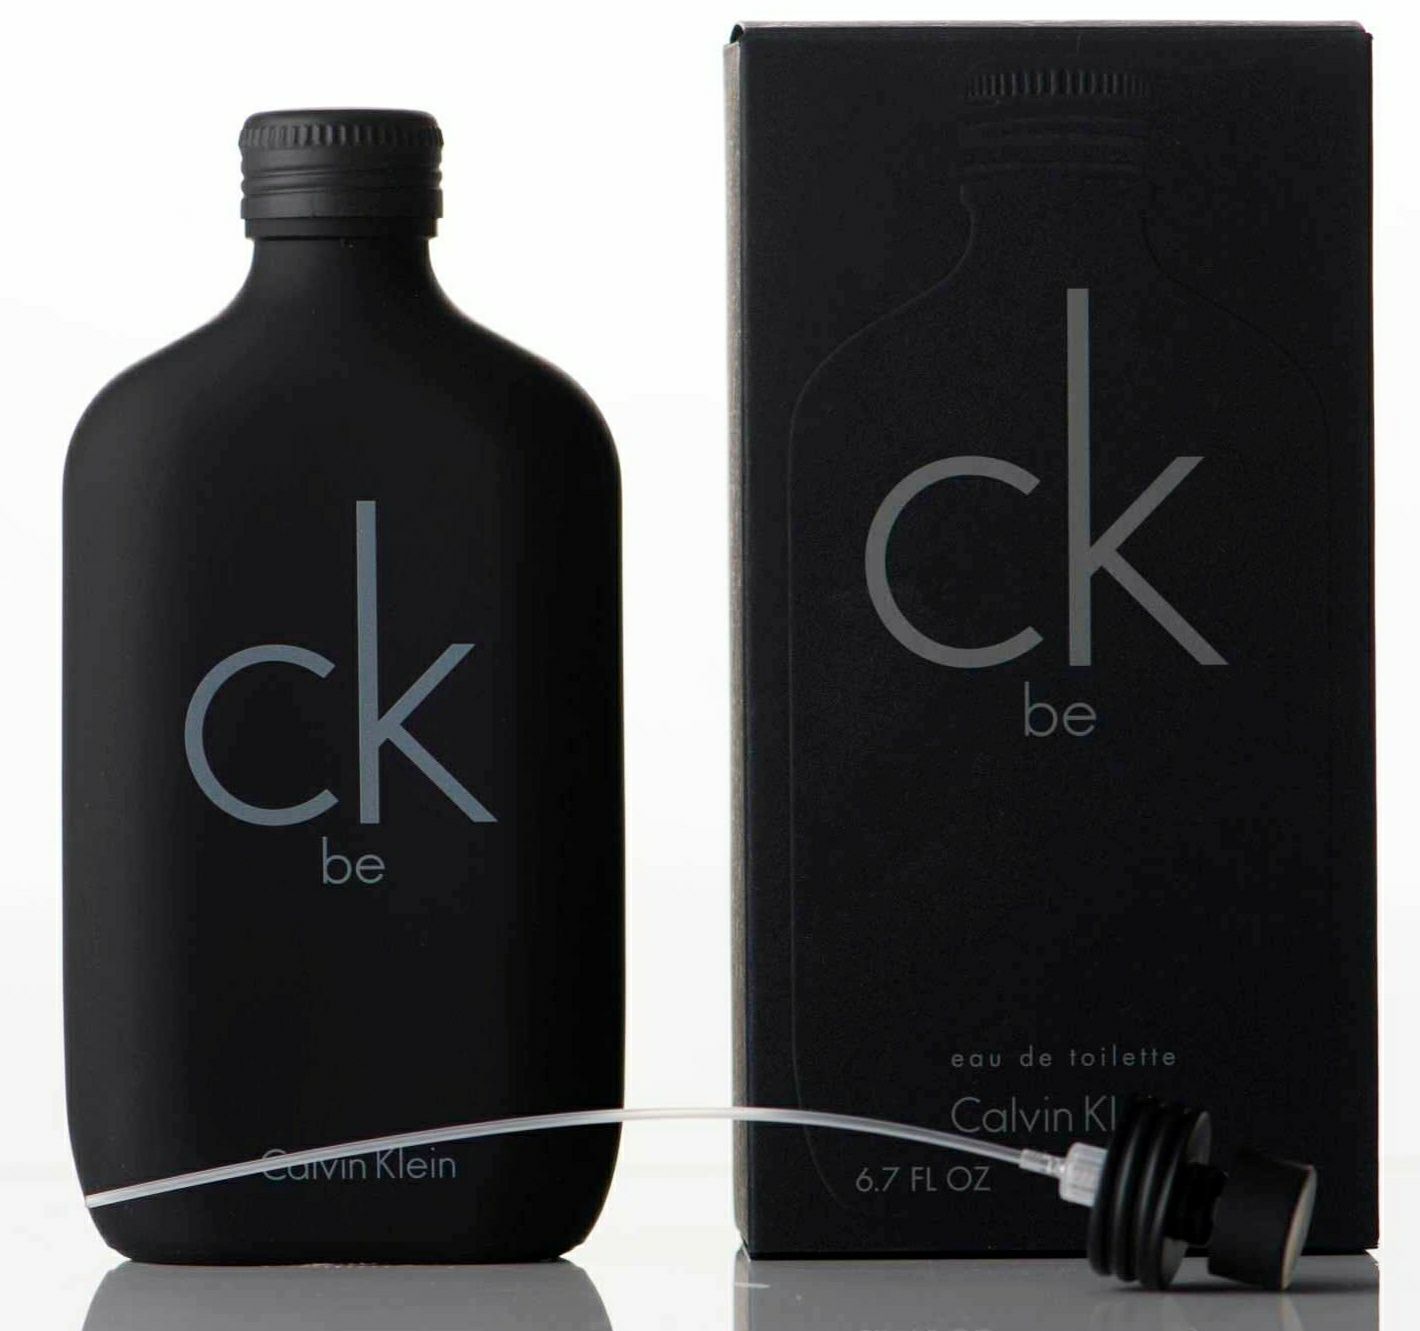 Calvin Klein CK Be 200 ml.